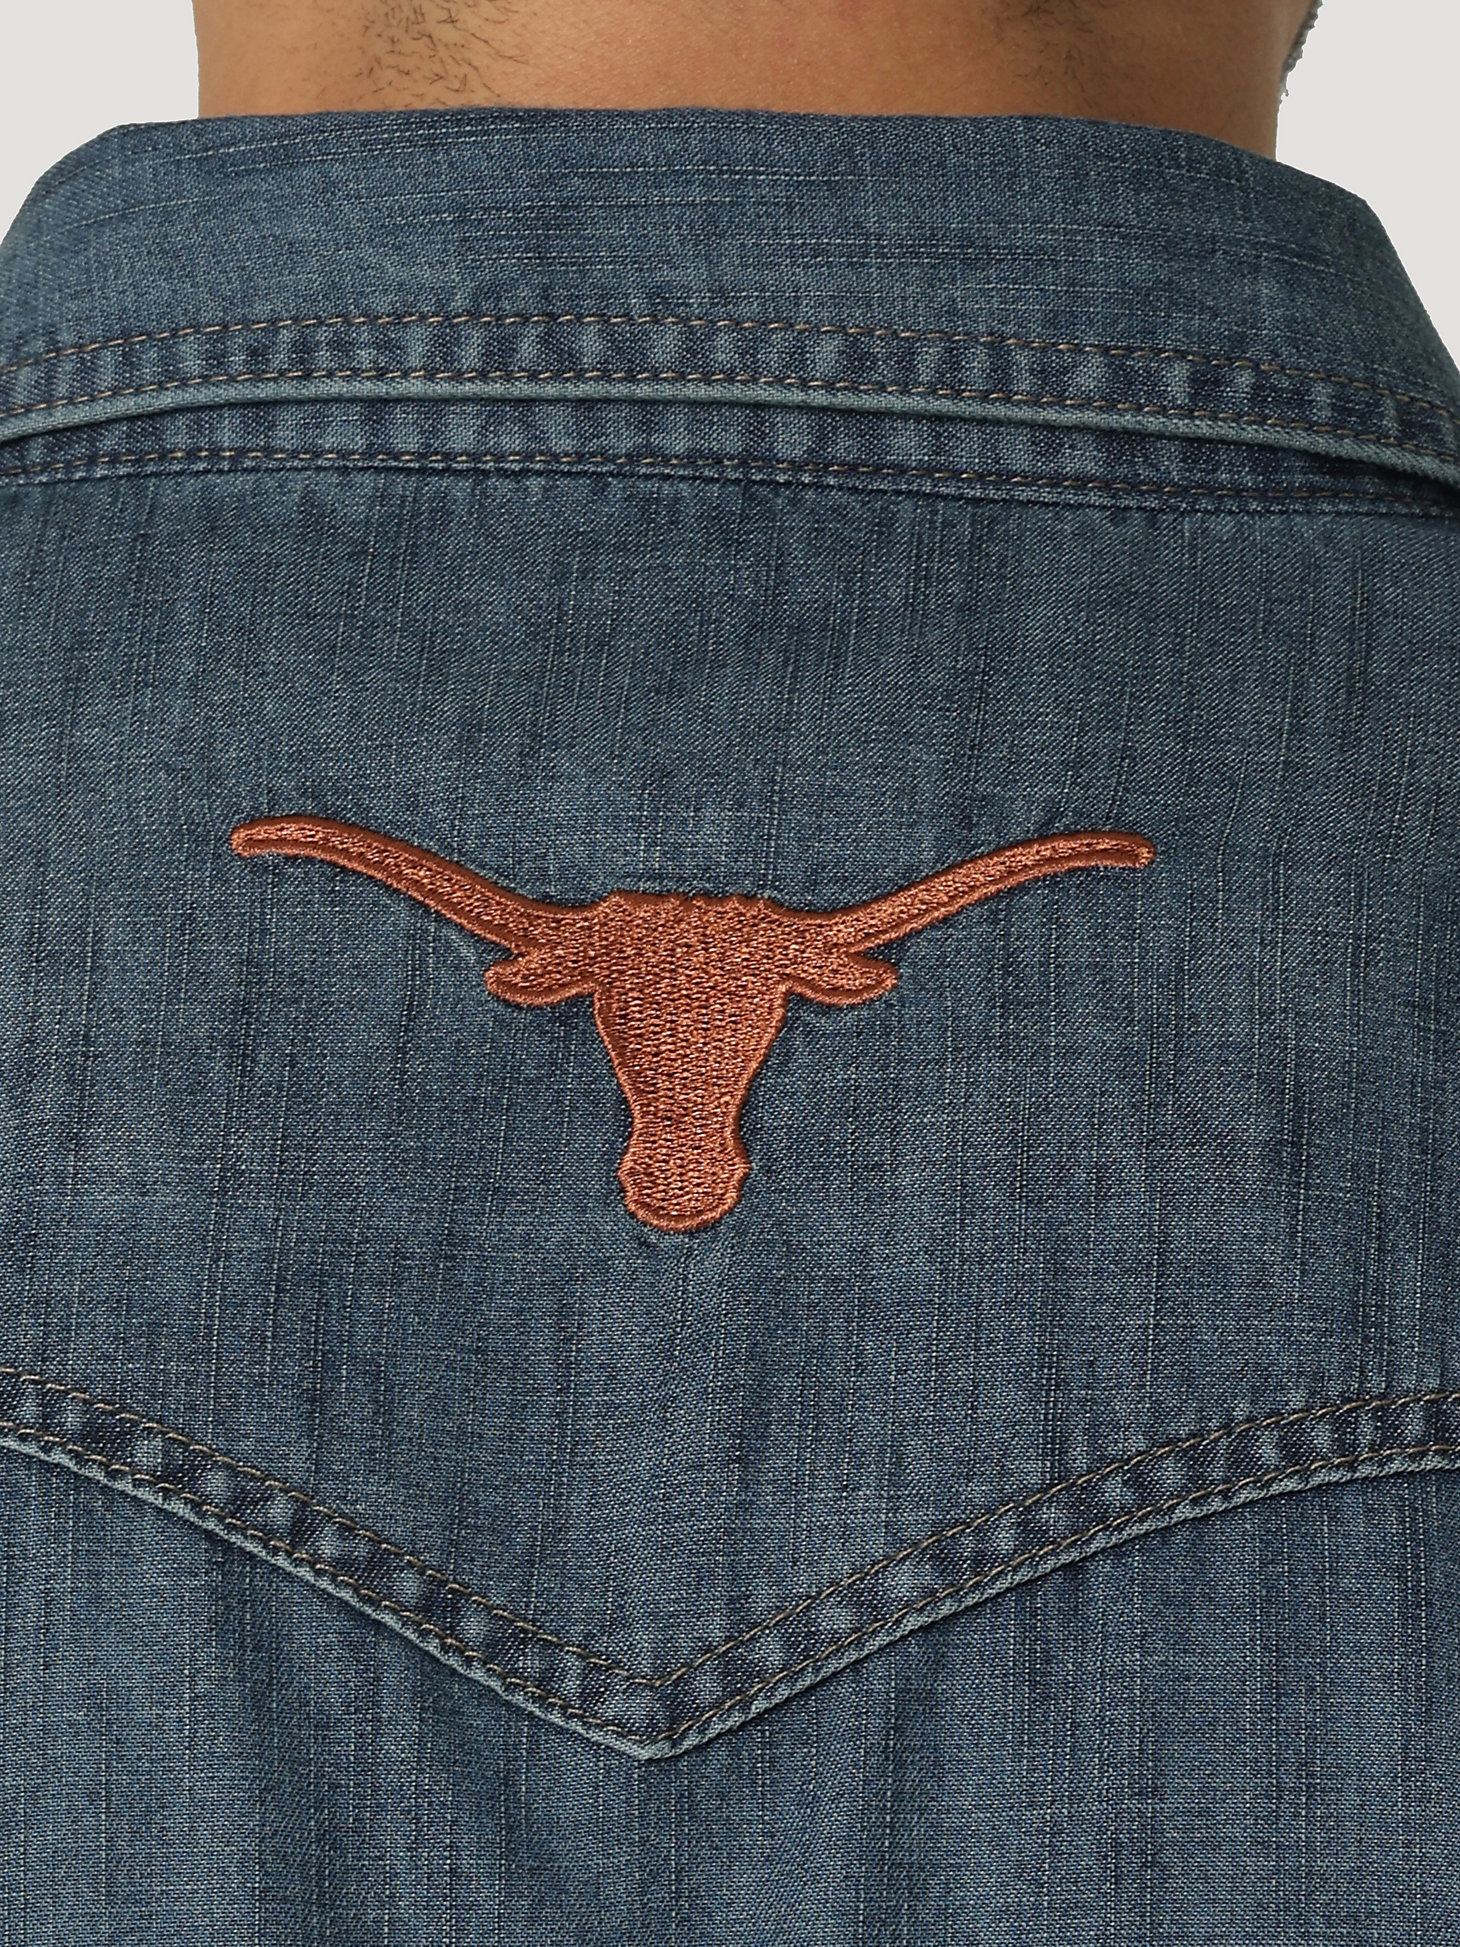 Men's Wrangler Collegiate Denim Western Snap Shirt in University of Texas alternative view 5